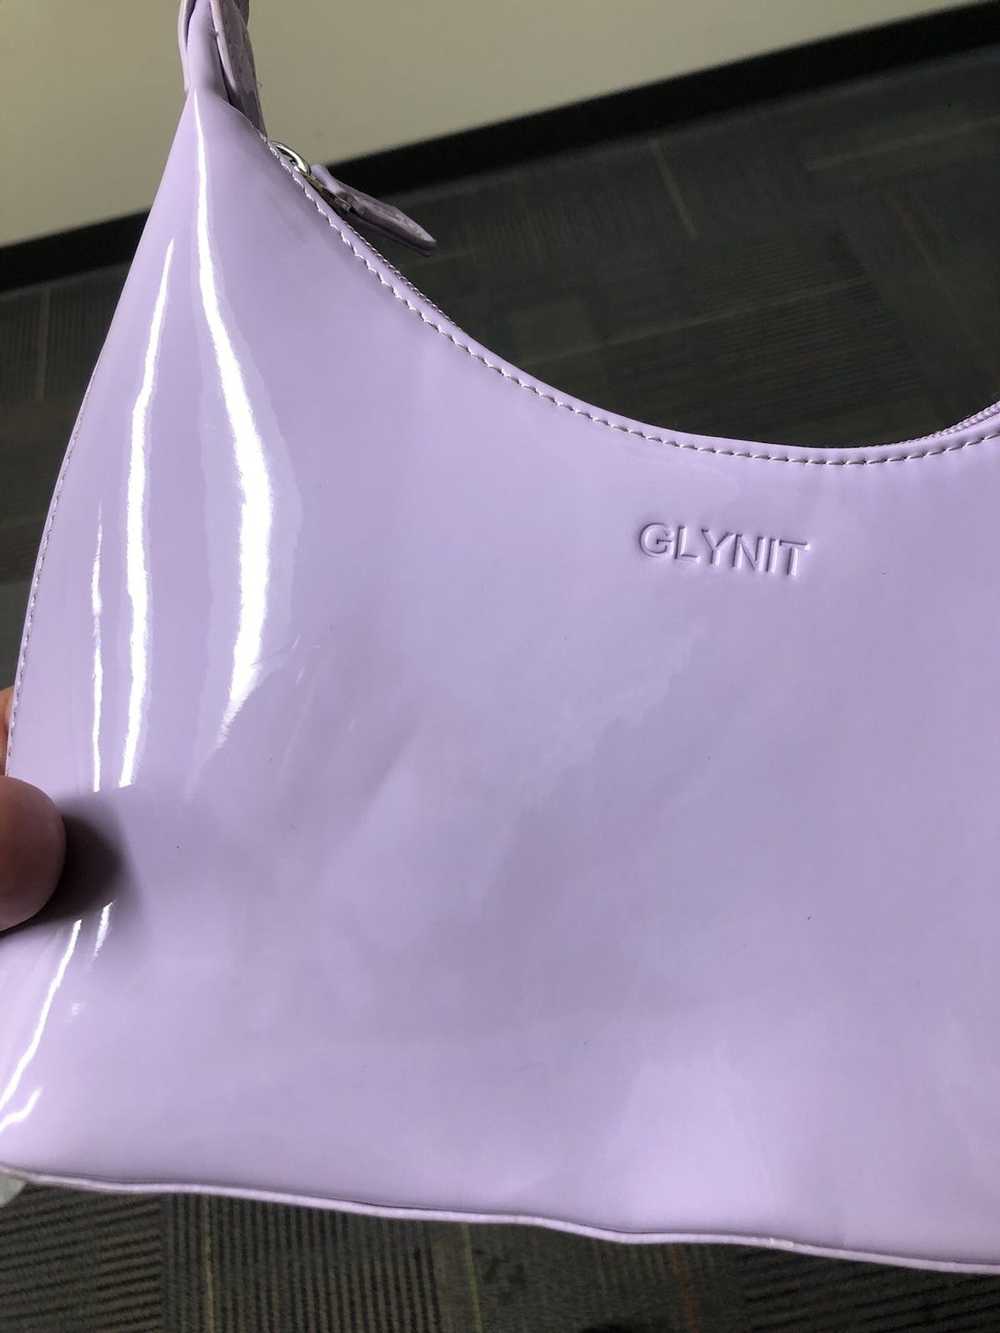 GLYNIT Glynit Molly shoulder bag purse - image 4